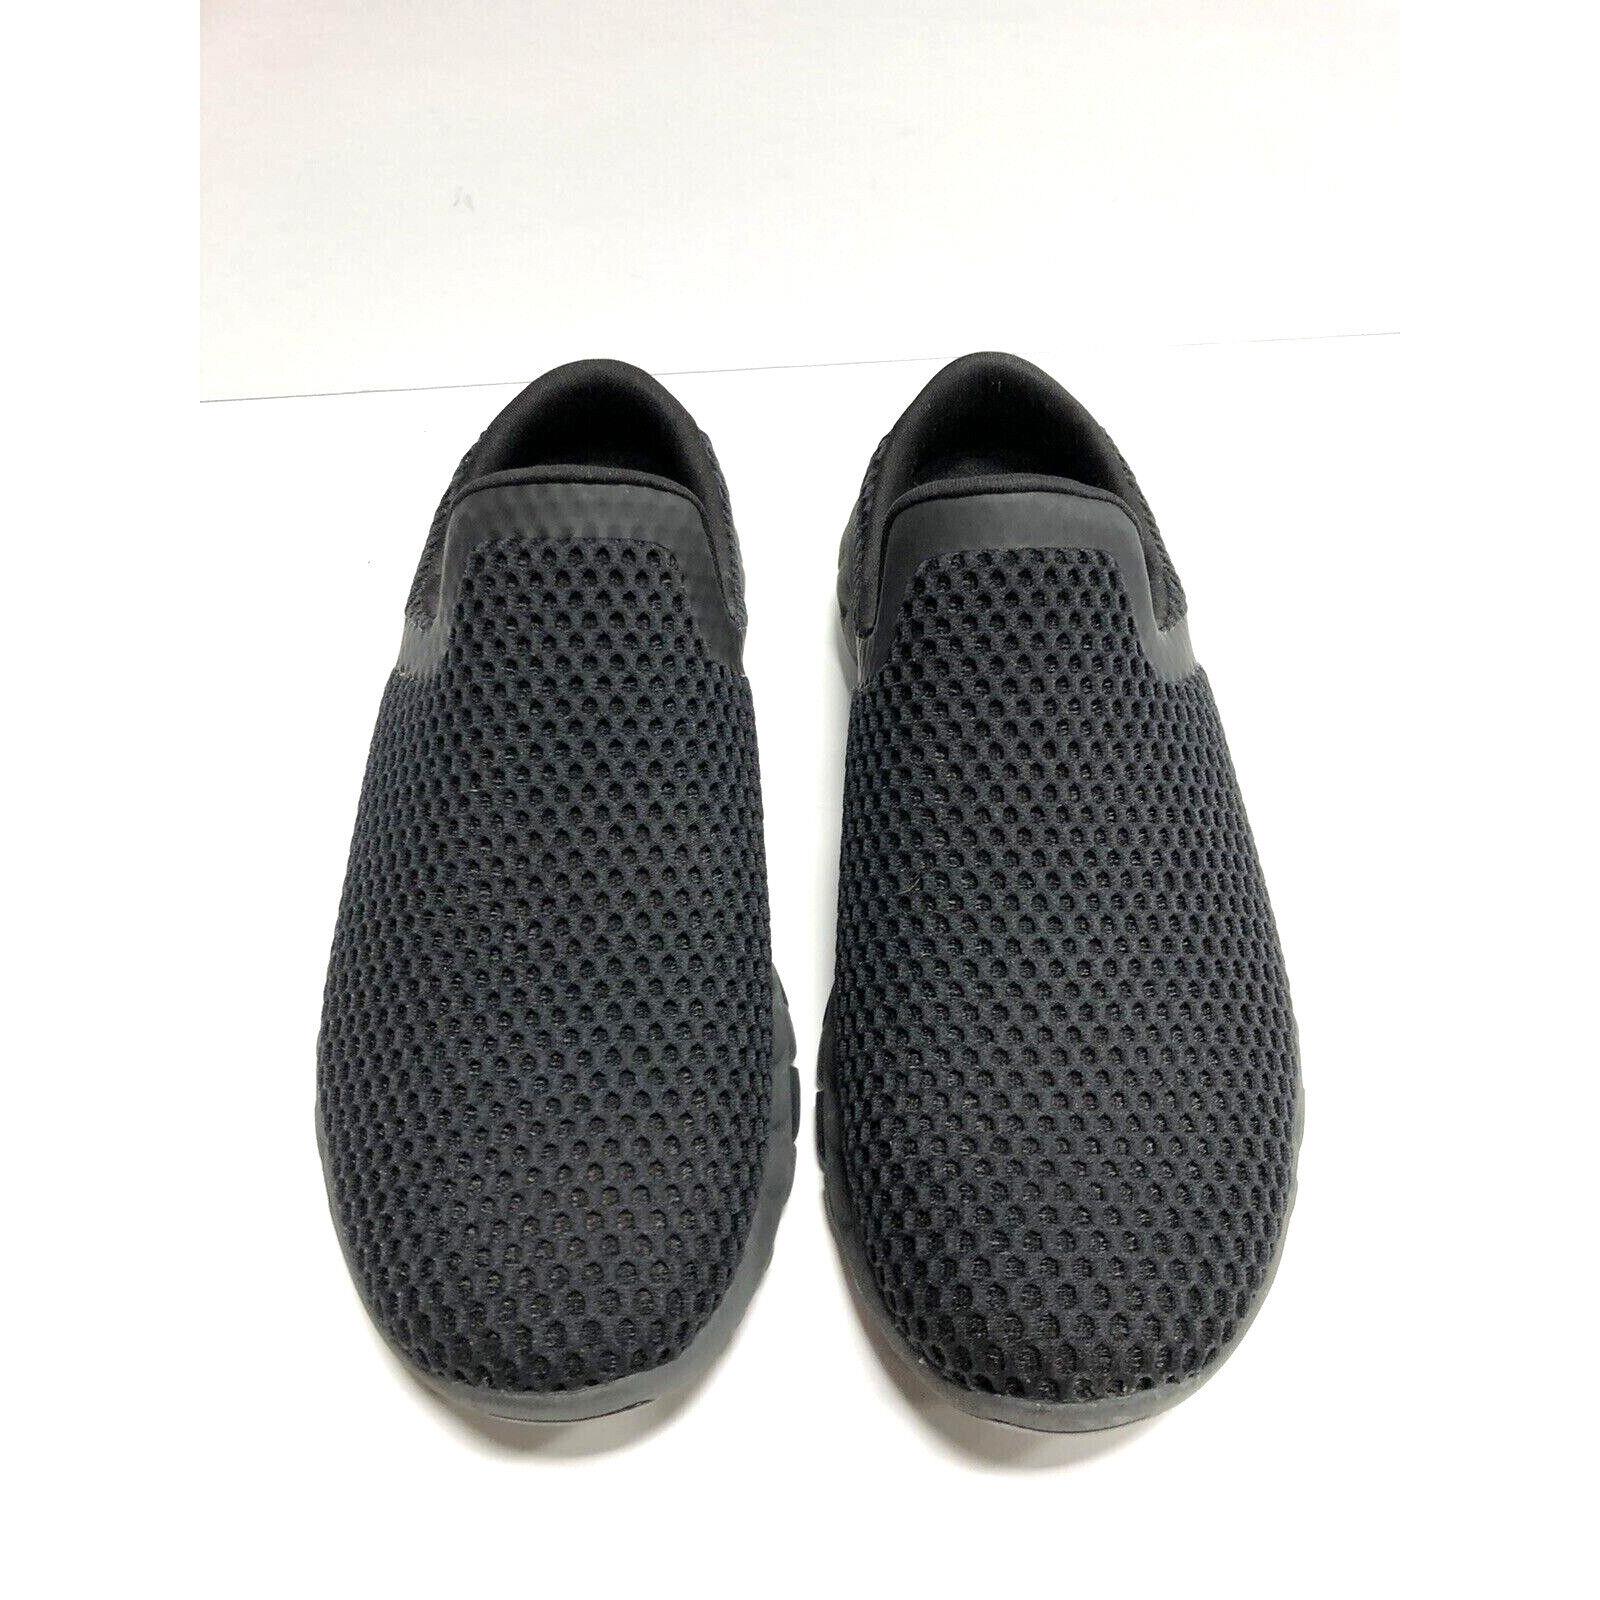 Merrell shoes  - Black 1